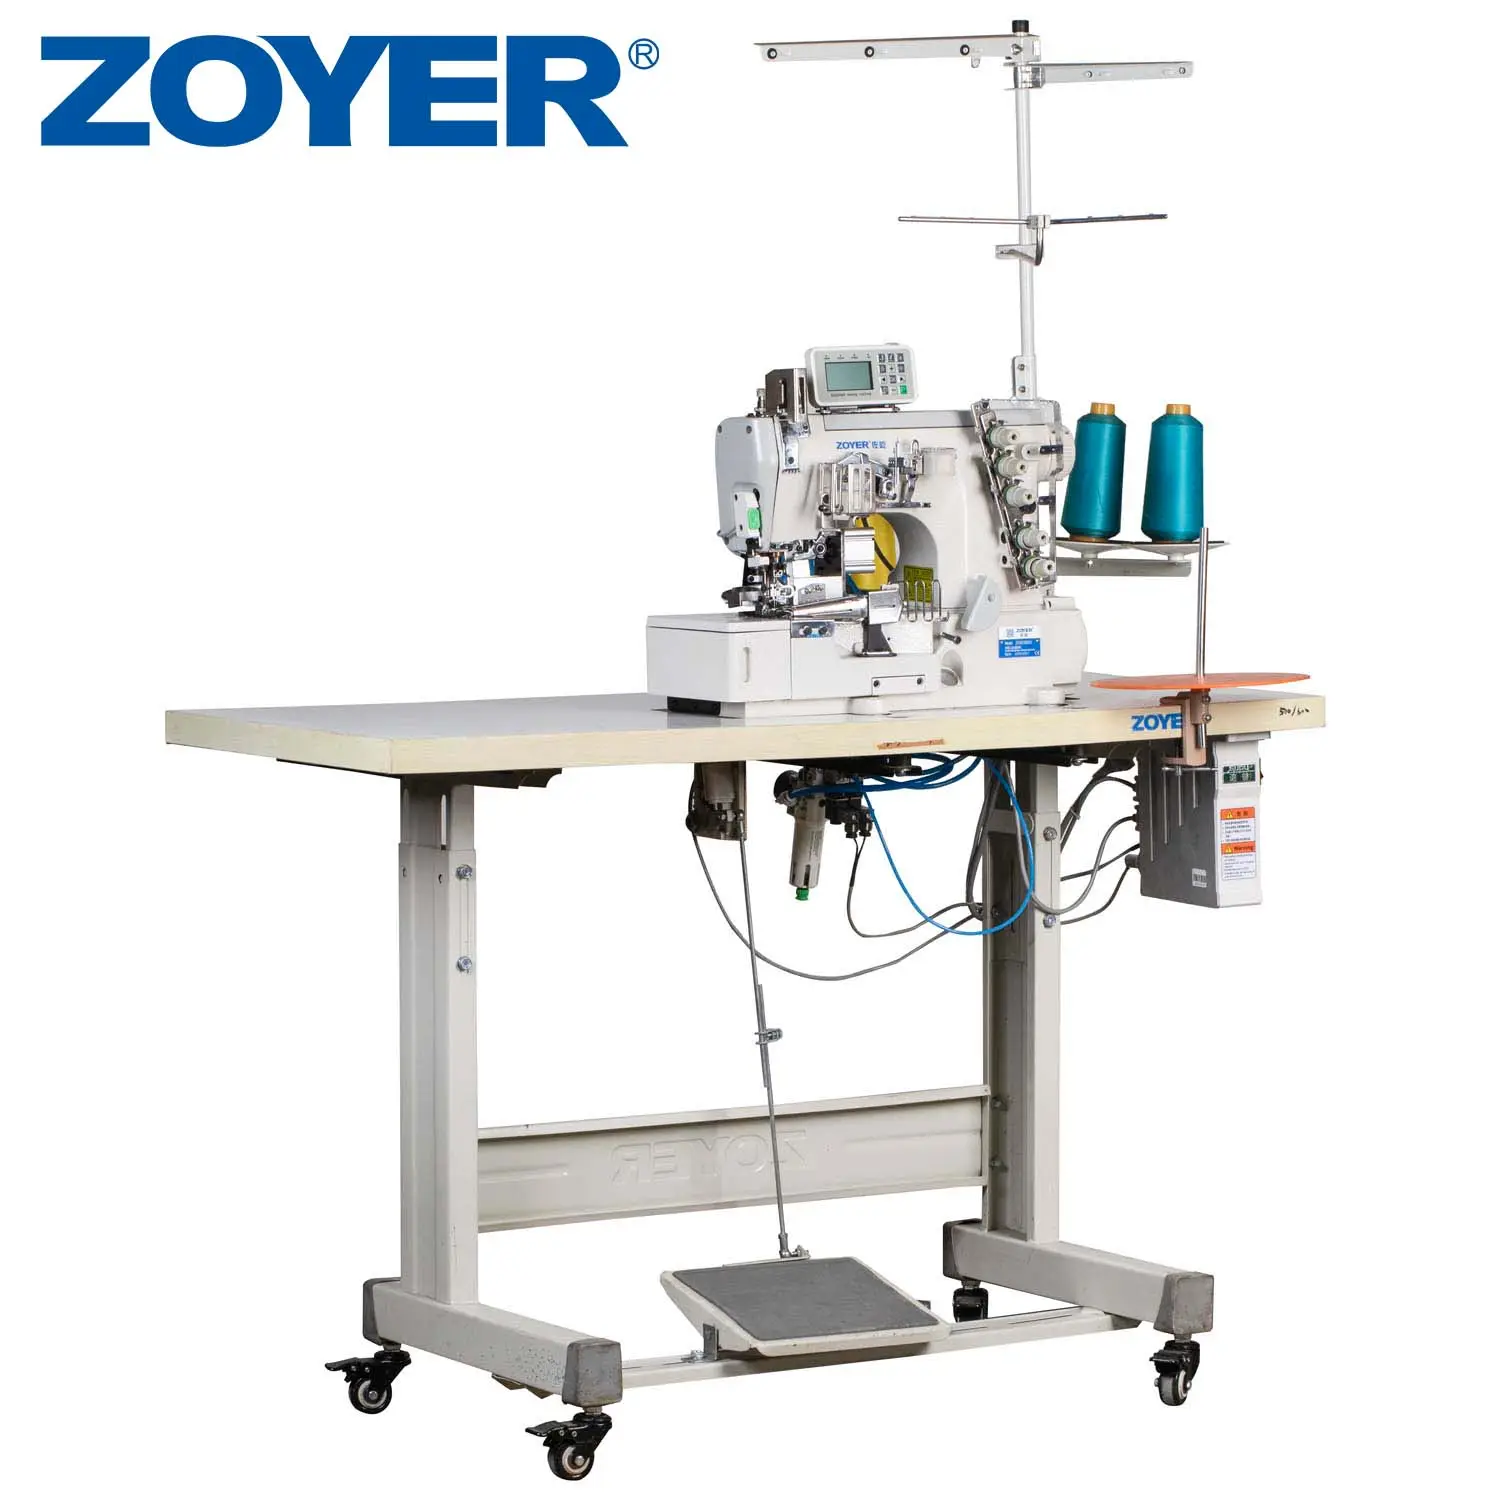 NEW Type high speed rolled-edging interlock sewing machine ZY500-02BBDG Zoyer with cutter